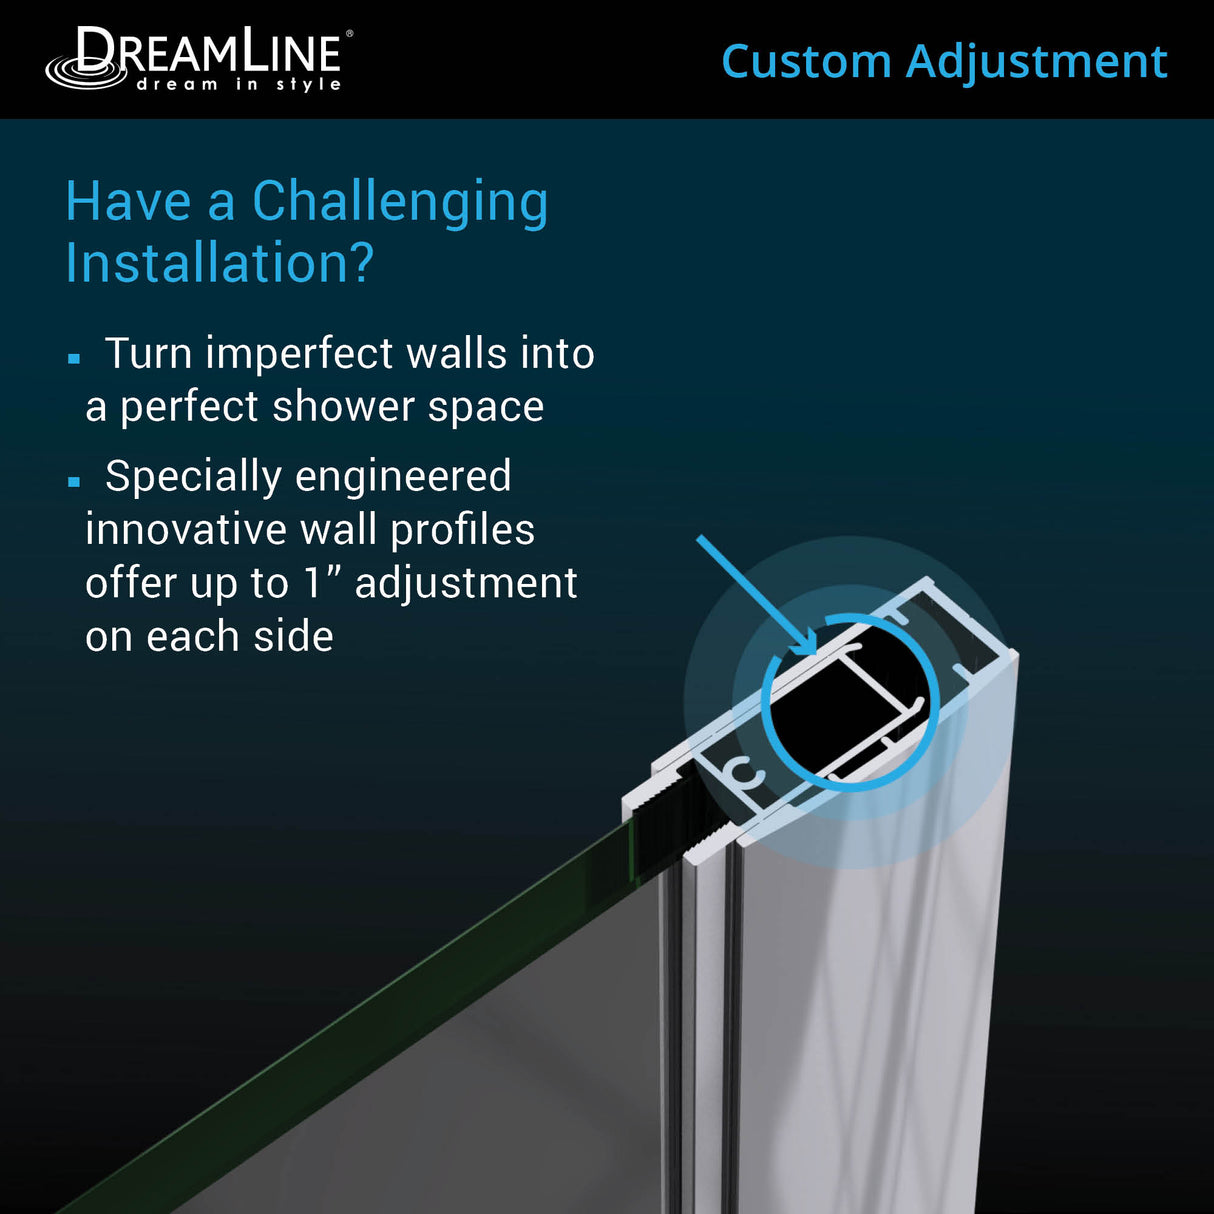 DreamLine Elegance-LS 38 3/4 - 40 3/4 in. W x 72 in. H Frameless Pivot Shower Door in Satin Black